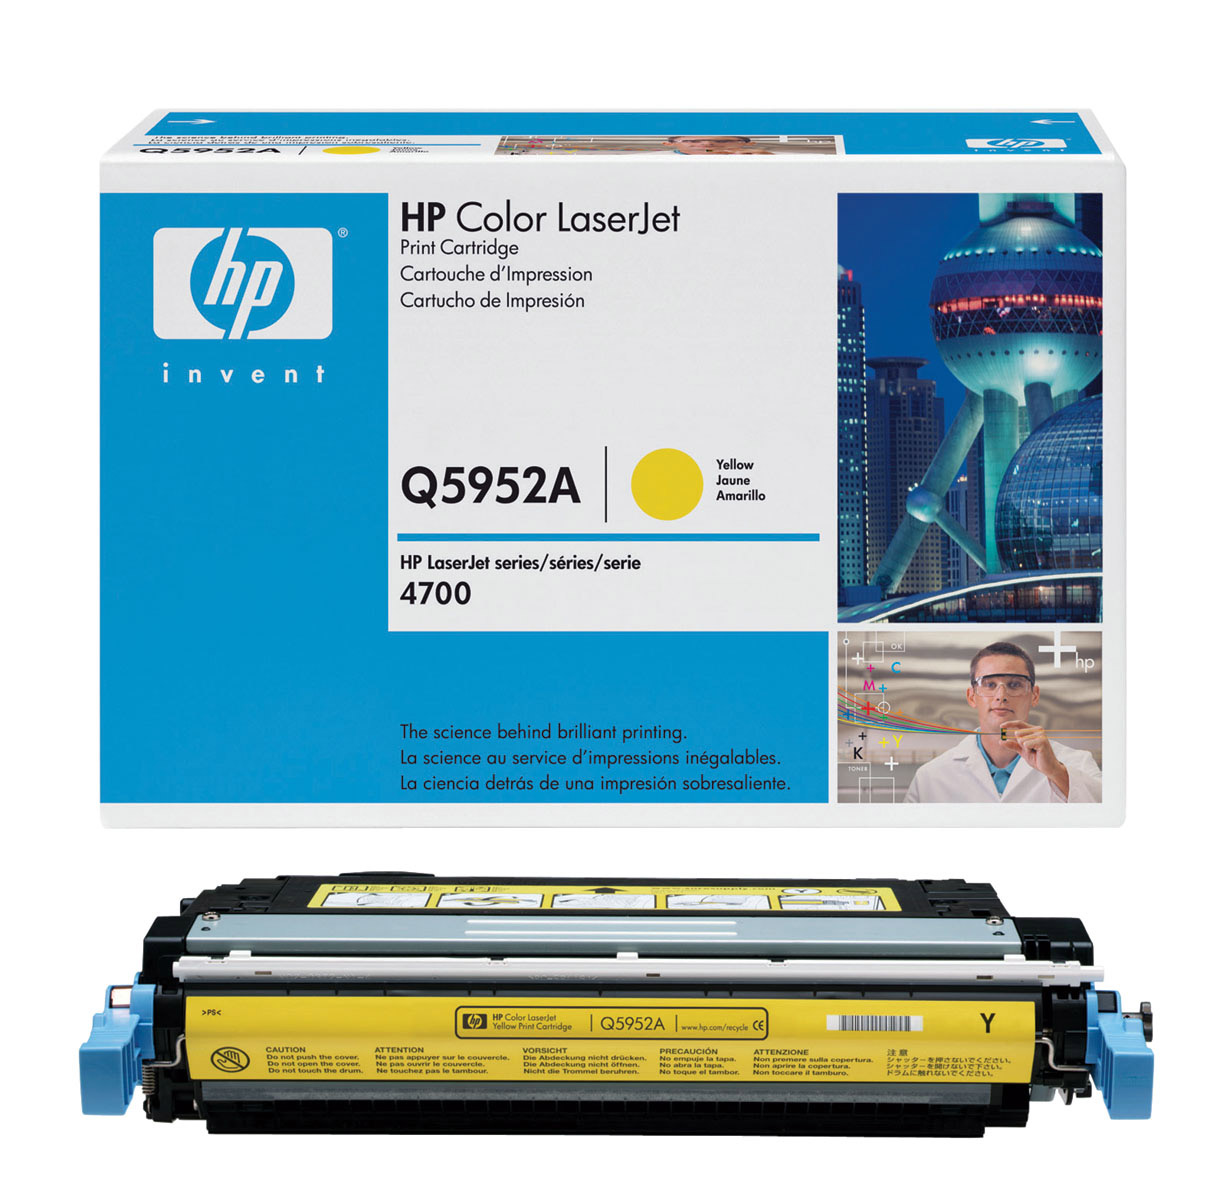 HP Q5952A Yellow printer cartridge